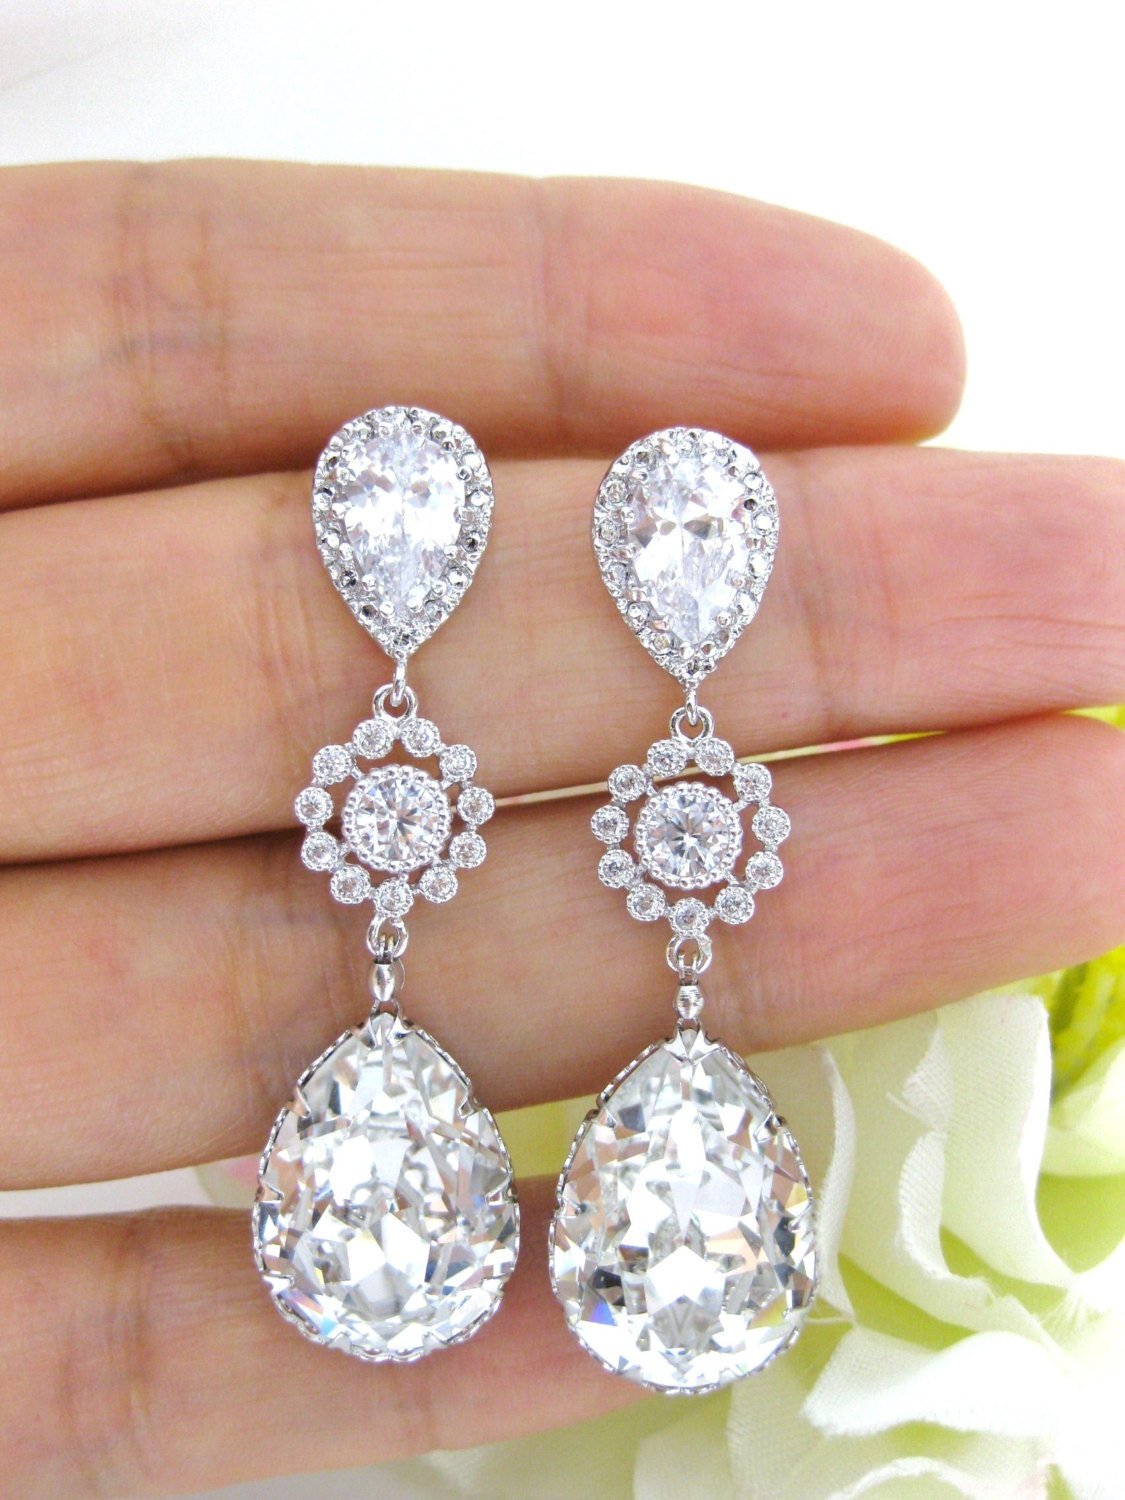 Bridal Crystal Earrings Swarovski Clear Crystals Wedding Jewelry Bridesmaid Gift Teardrop Earrings Long Bridal Earrings (e112)